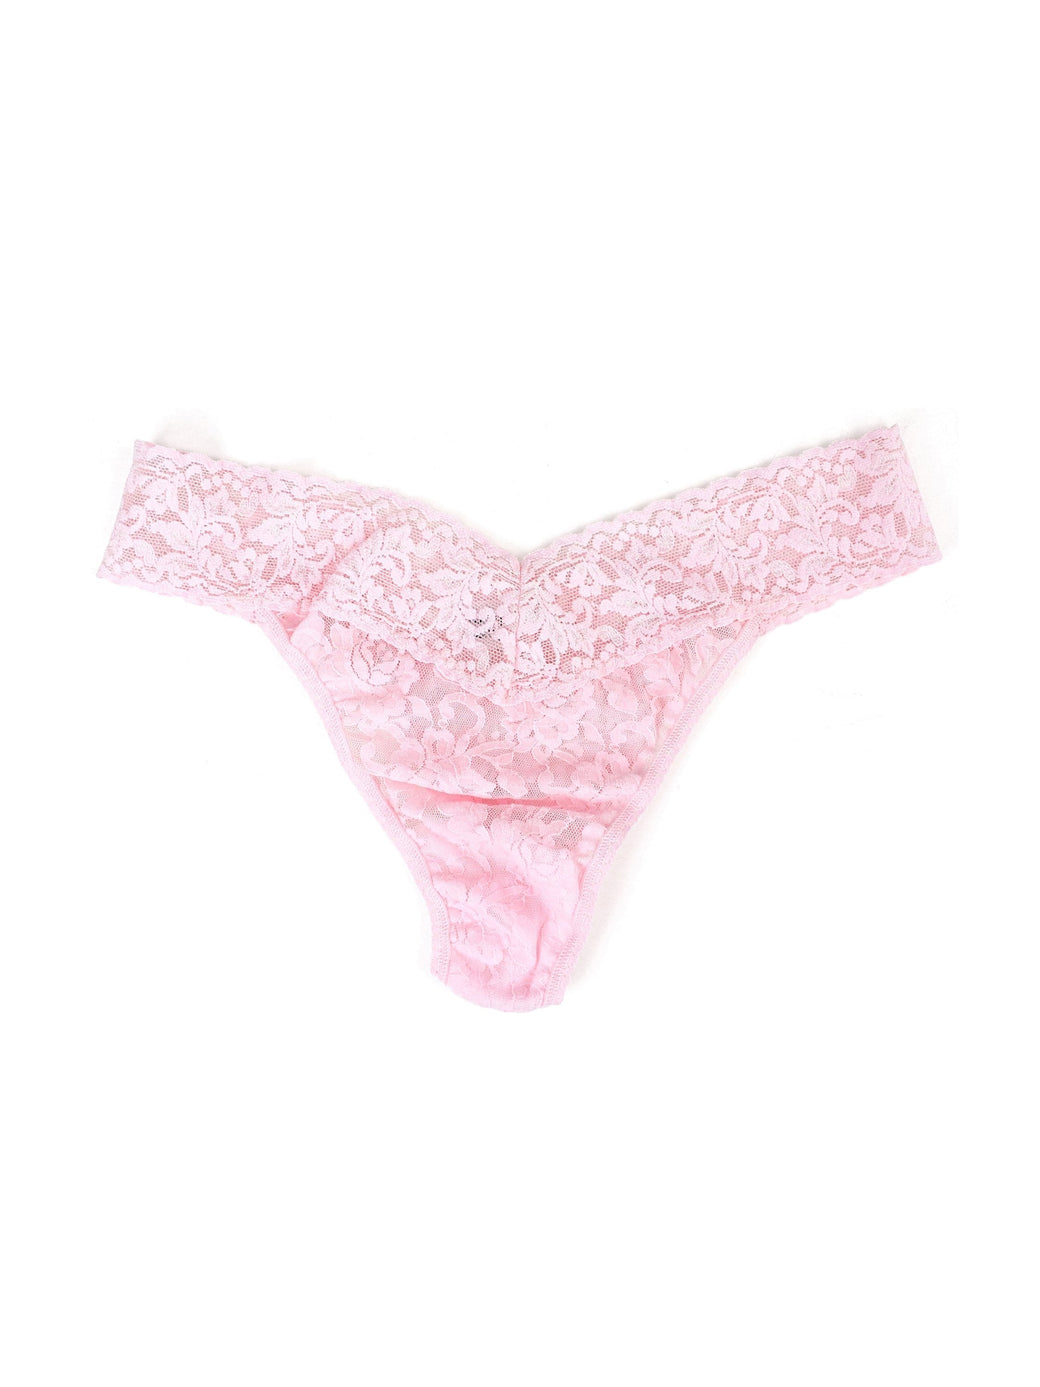 Plus Size Signature Lace Original Rise Thong Bliss Pink